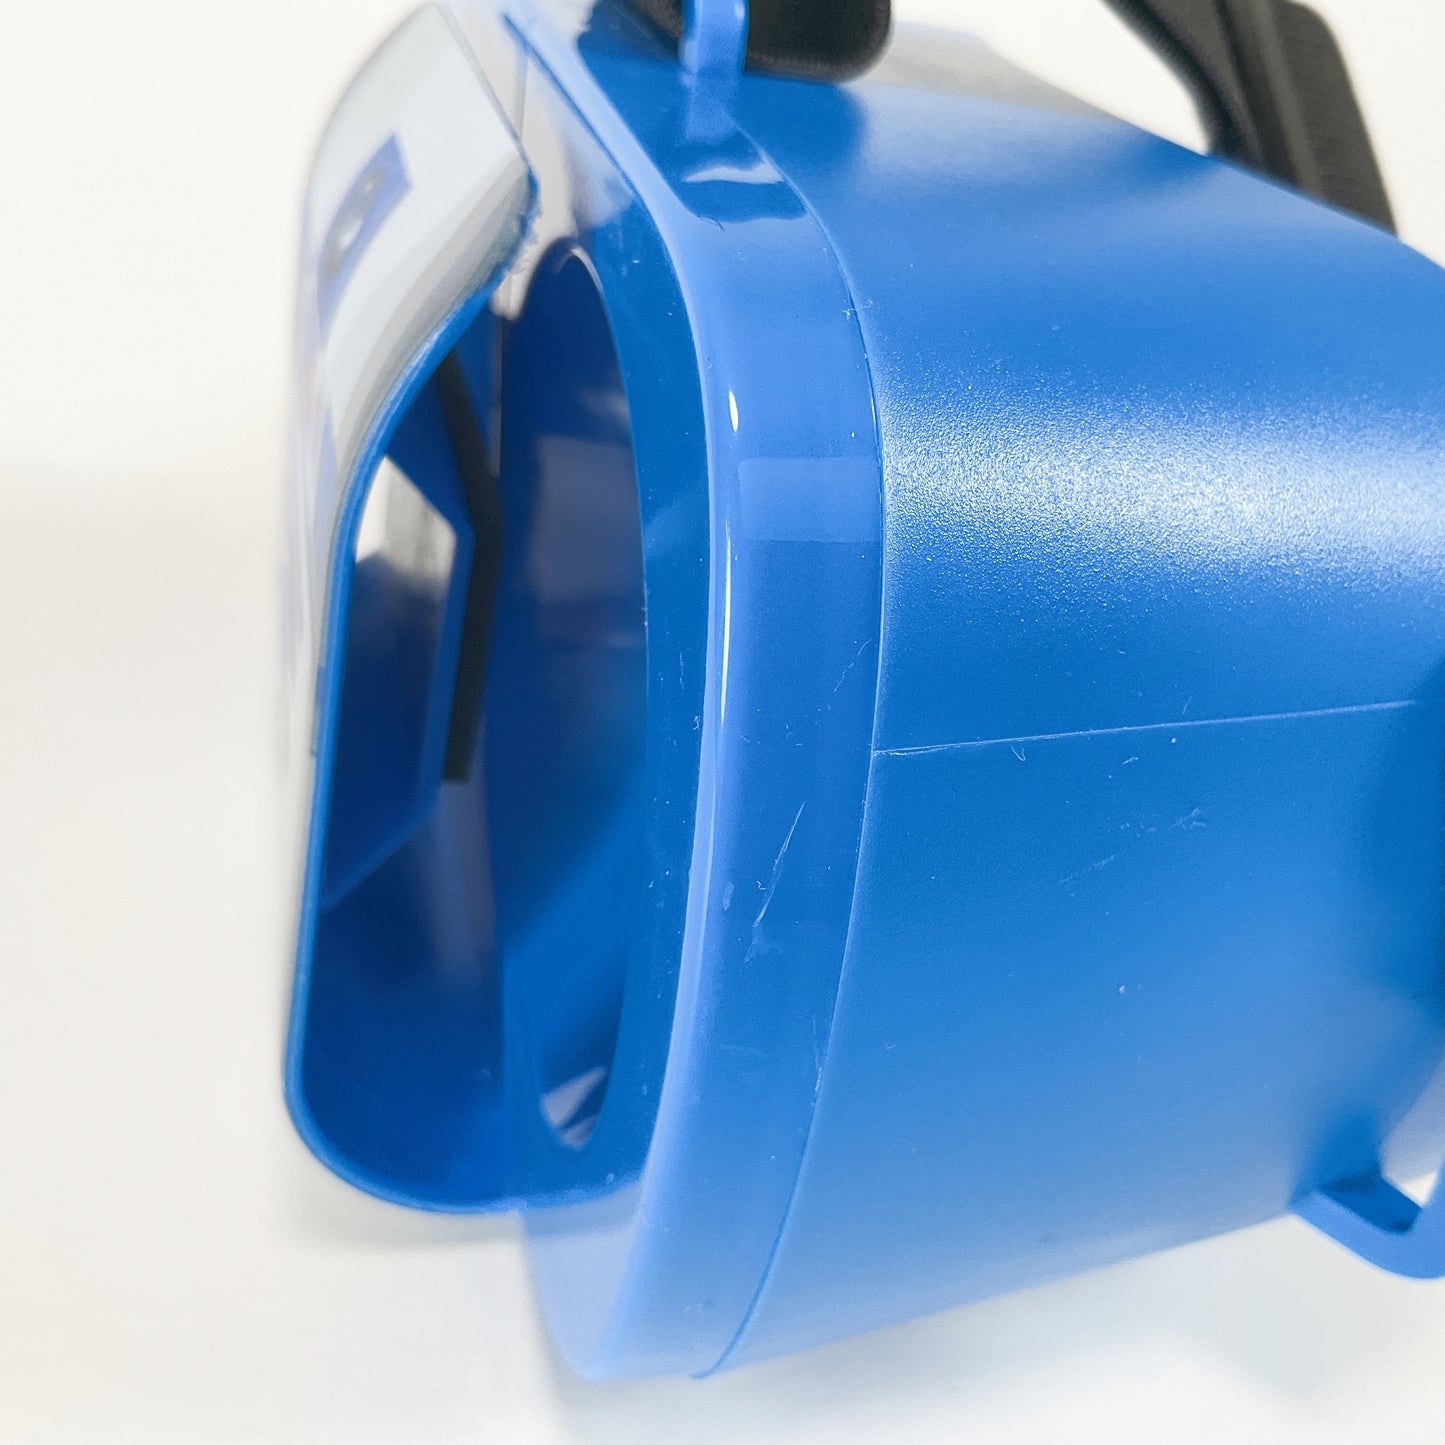 Typo - STAR WARS Virtual Reality Headset